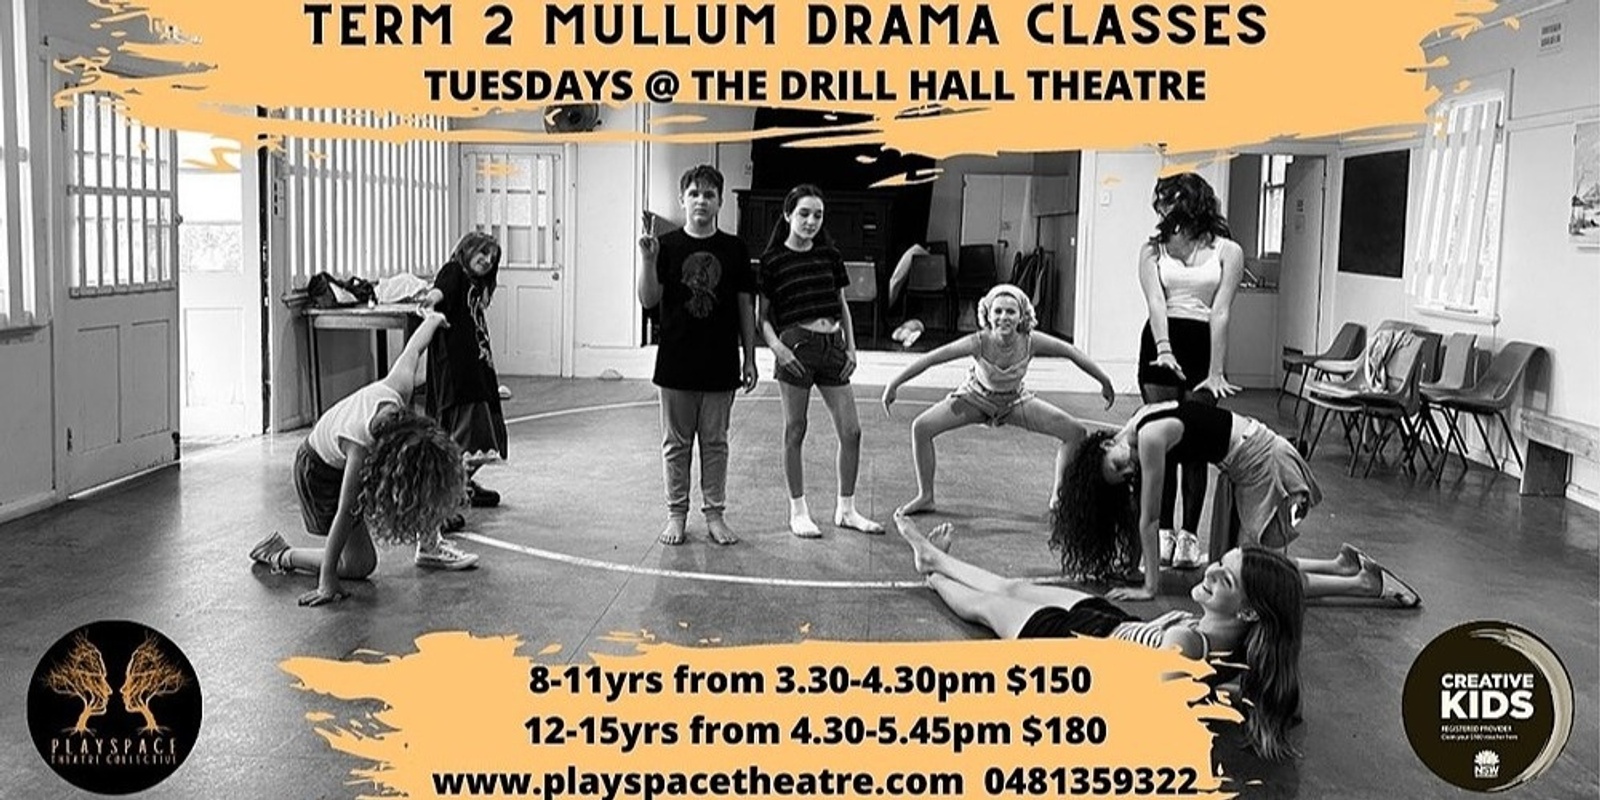 Mullumbimby Drill Hall Drama Tuesdays 8-11yrs